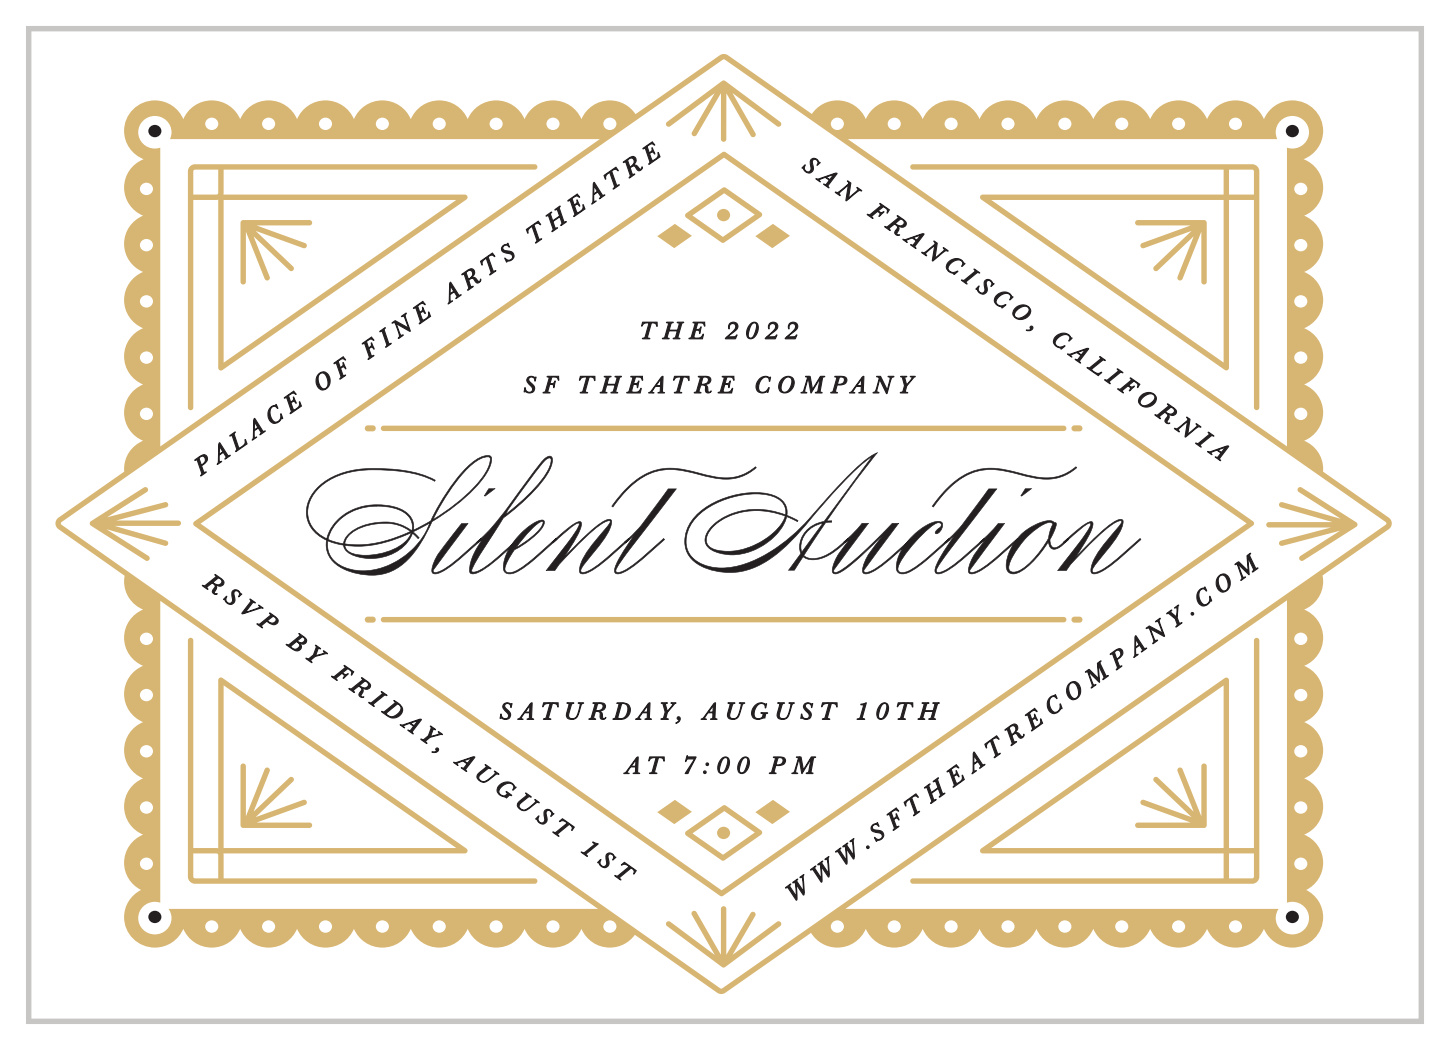 Silent Auction Gala Invitations